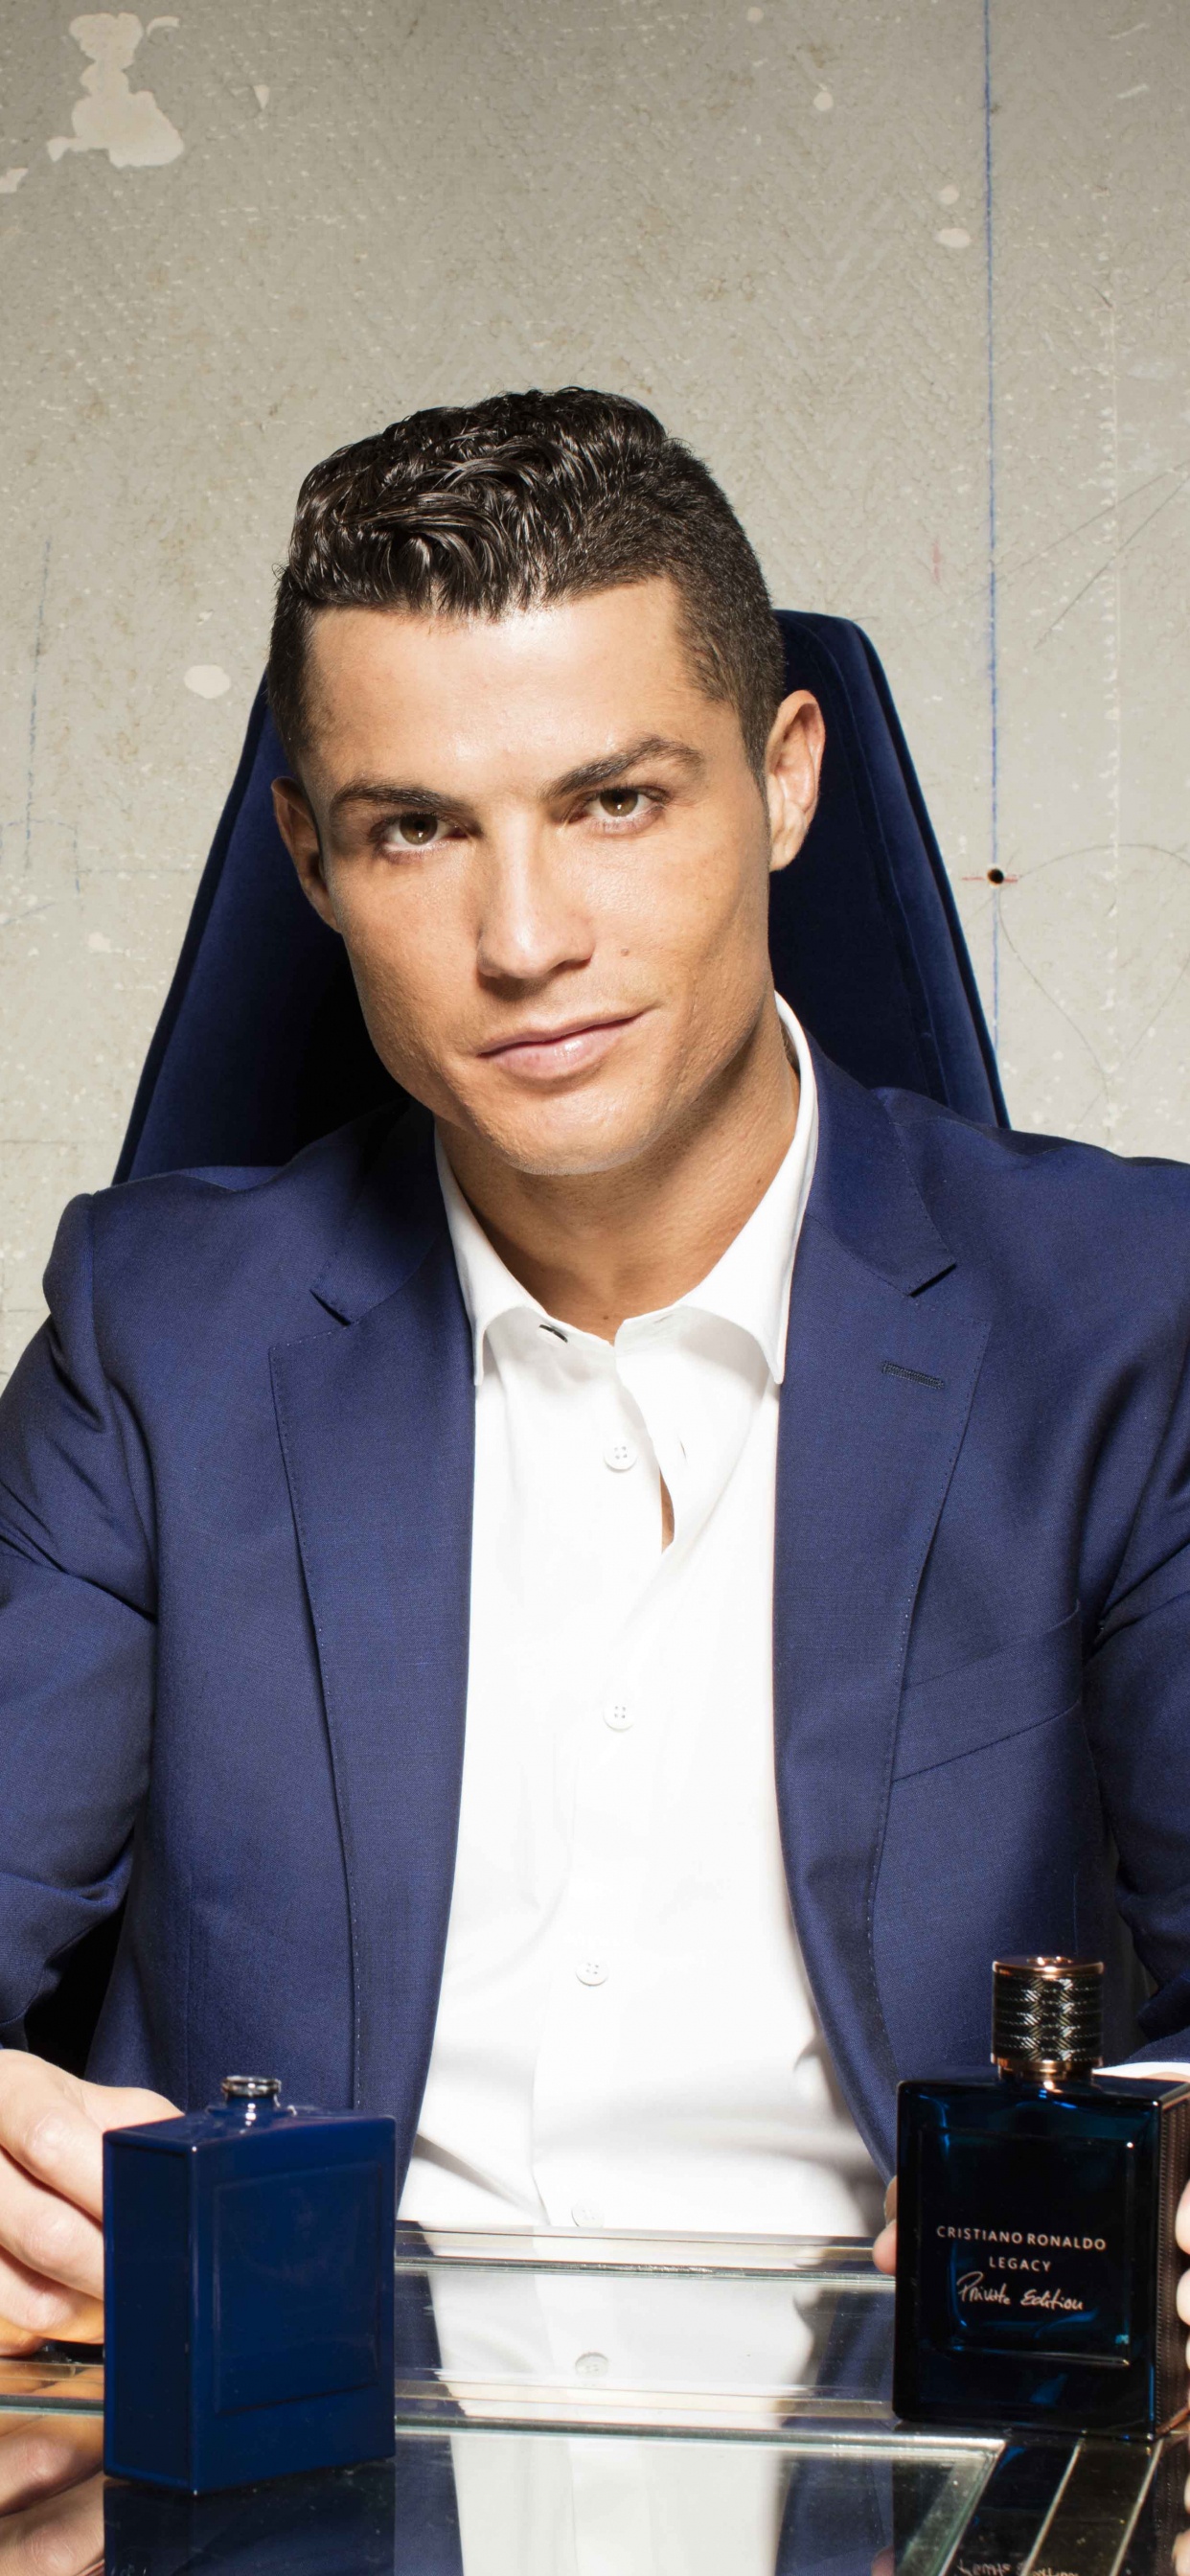 Cristiano Ronaldo, Real Madrid c f, Forehead, Suit, Job. Wallpaper in 1242x2688 Resolution